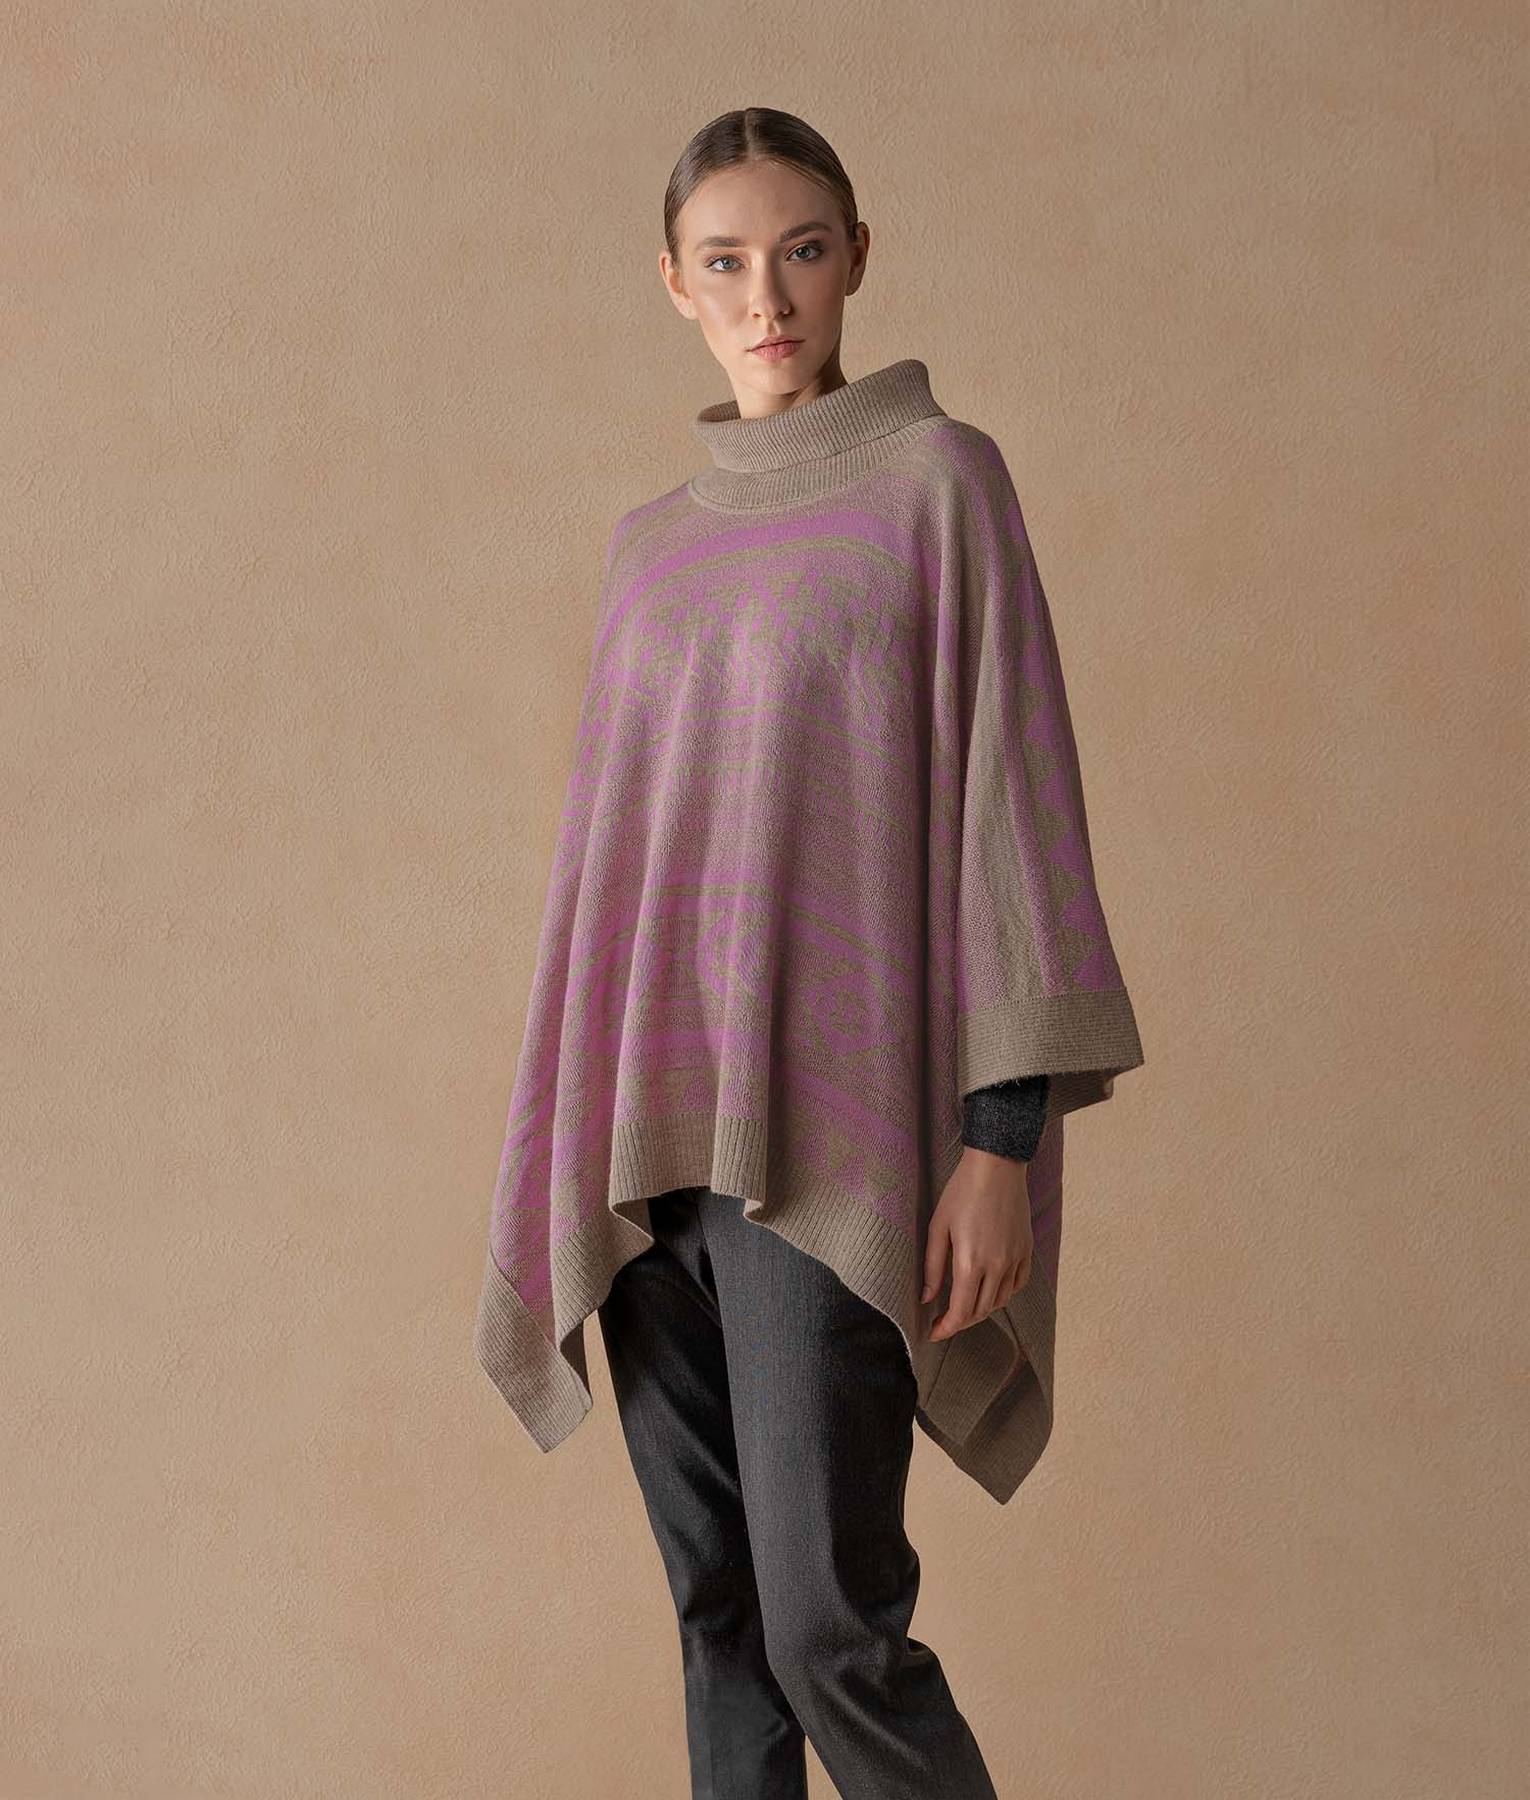 Modern essentials for Women & Men with the finest alpaca wool – Sol ...